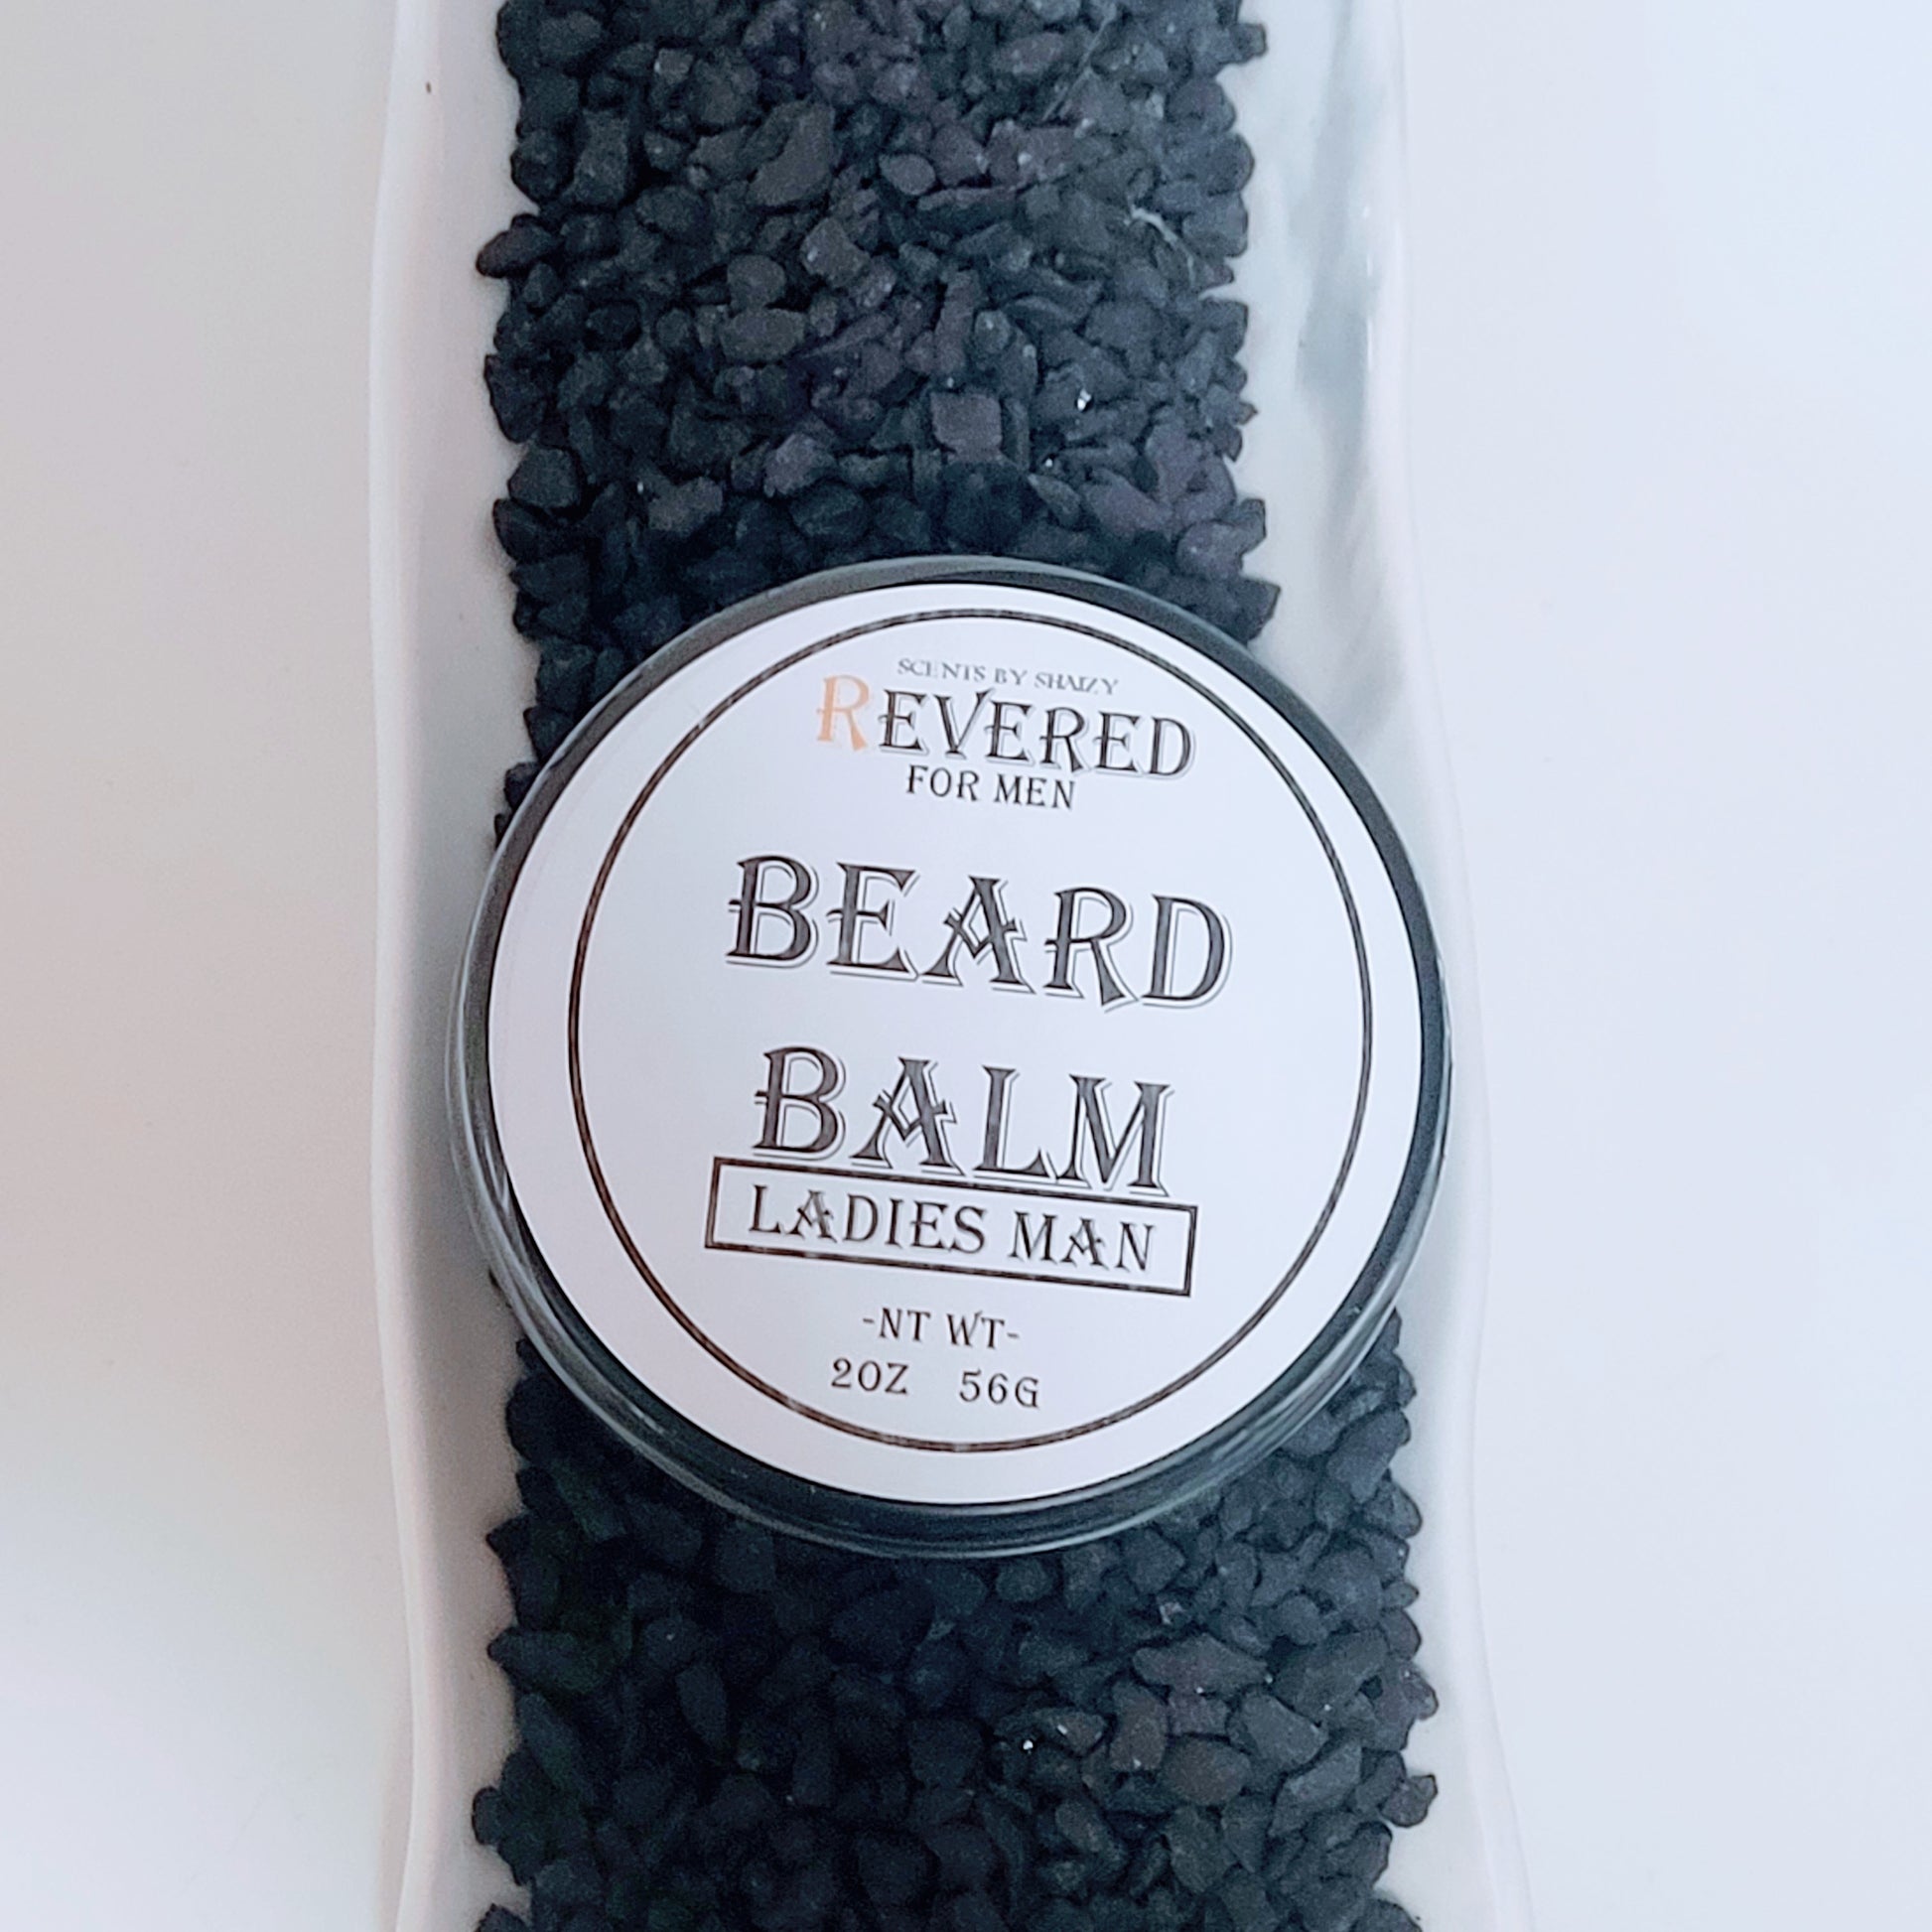 Ladies Man Beard Balm | Men's grooming